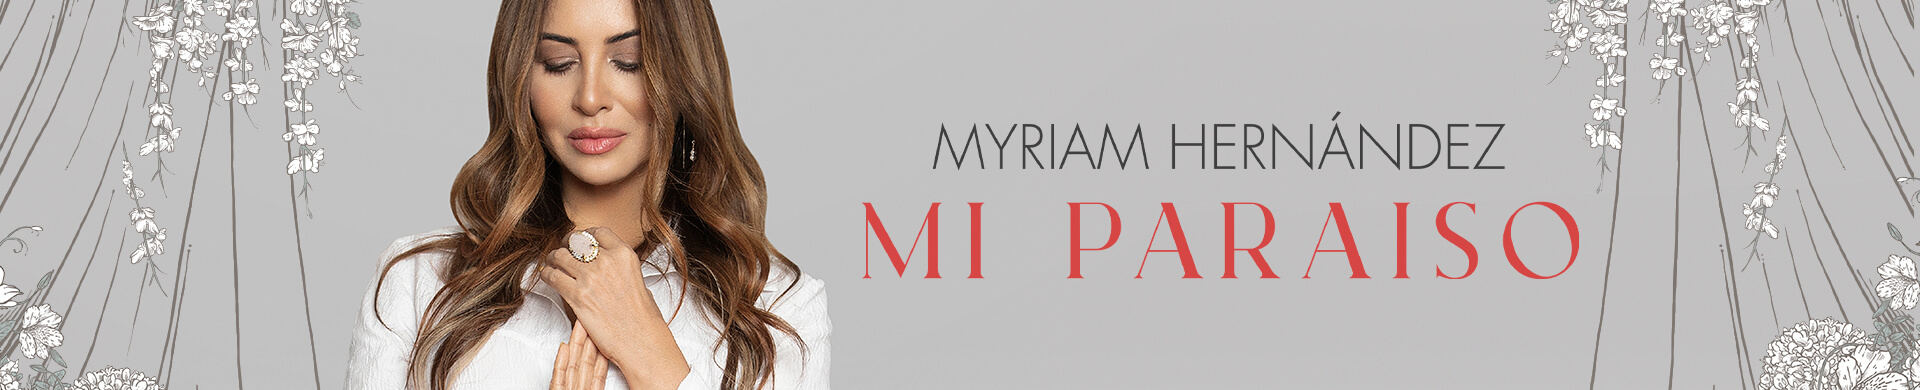 <p>MYRIAM HERNANDEZ</p>
<p>MI PARAISO TOUR</p>
